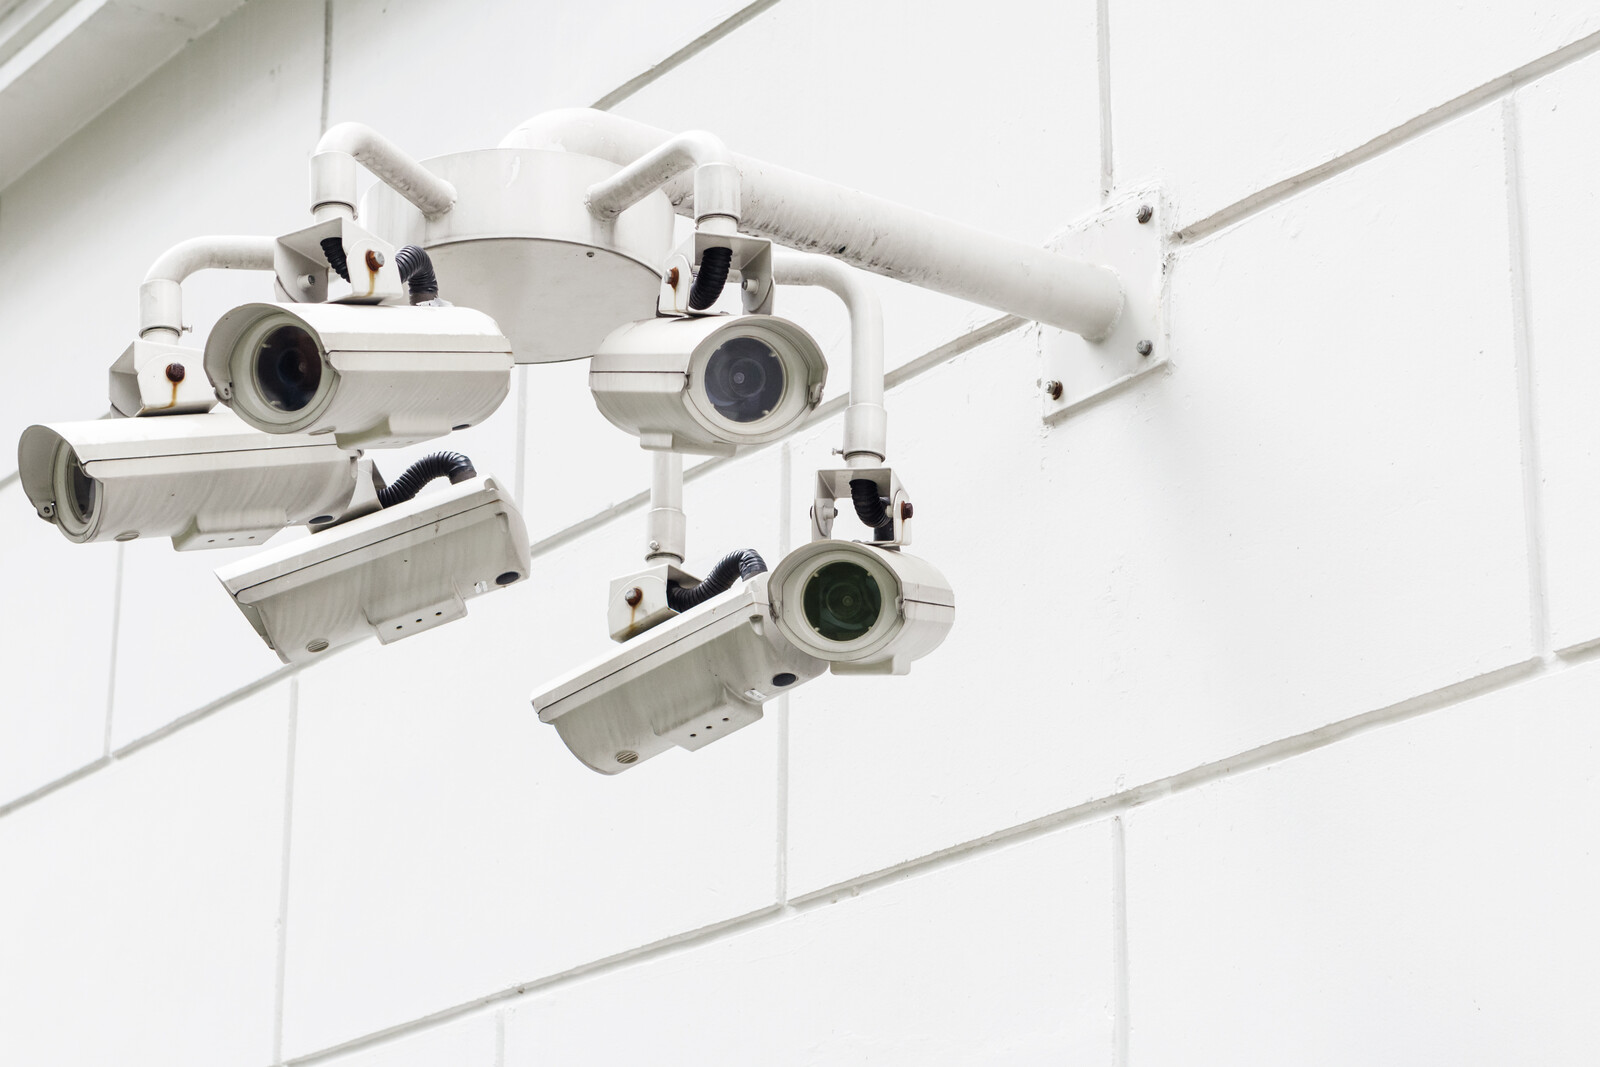 Surveillance cameras on a building